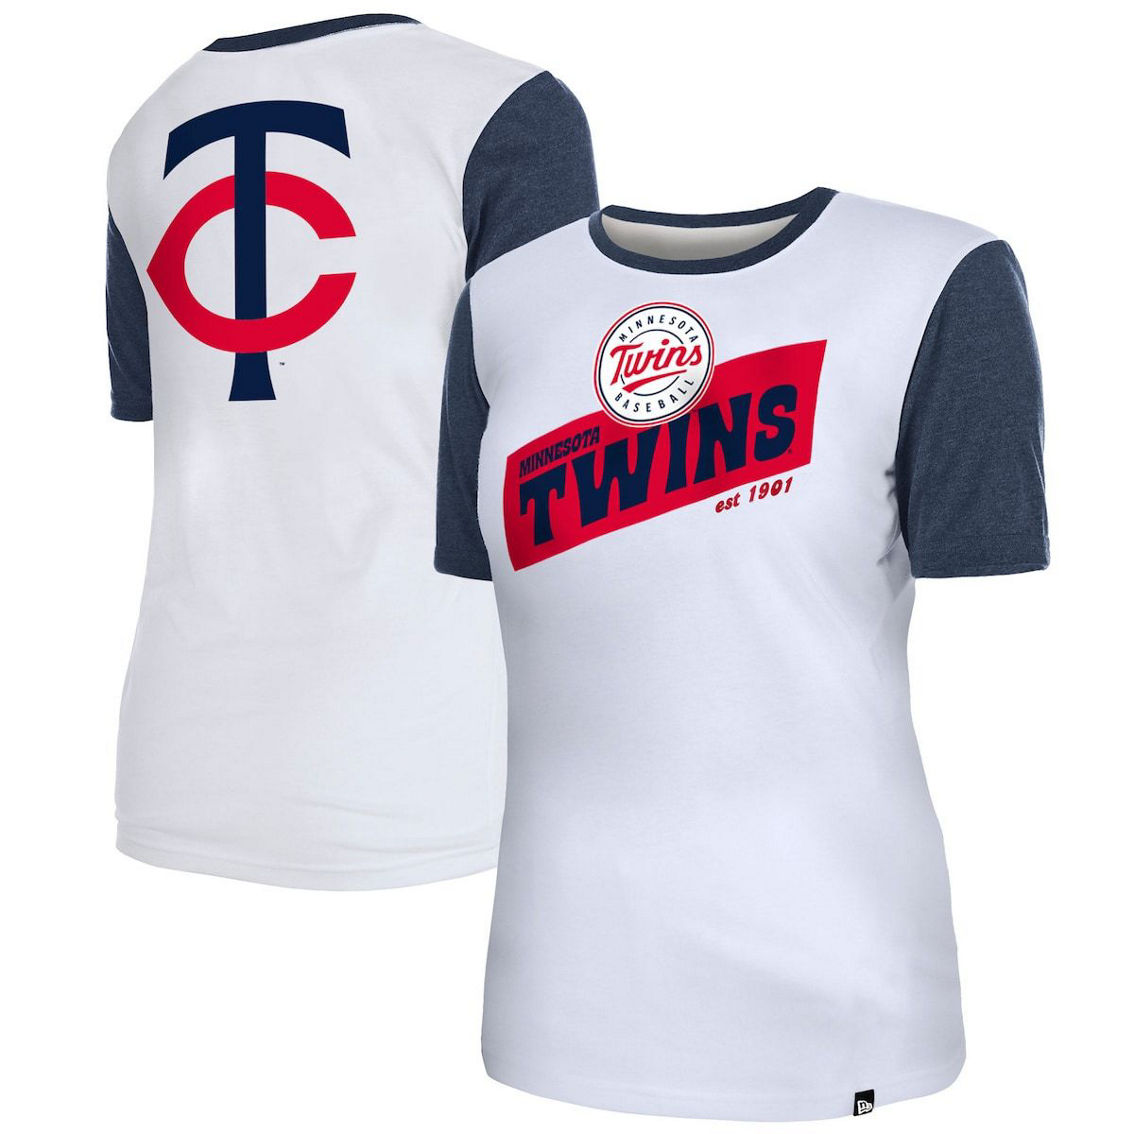 New Era Women's White Minnesota Twins Colorblock T-Shirt - Image 2 of 4